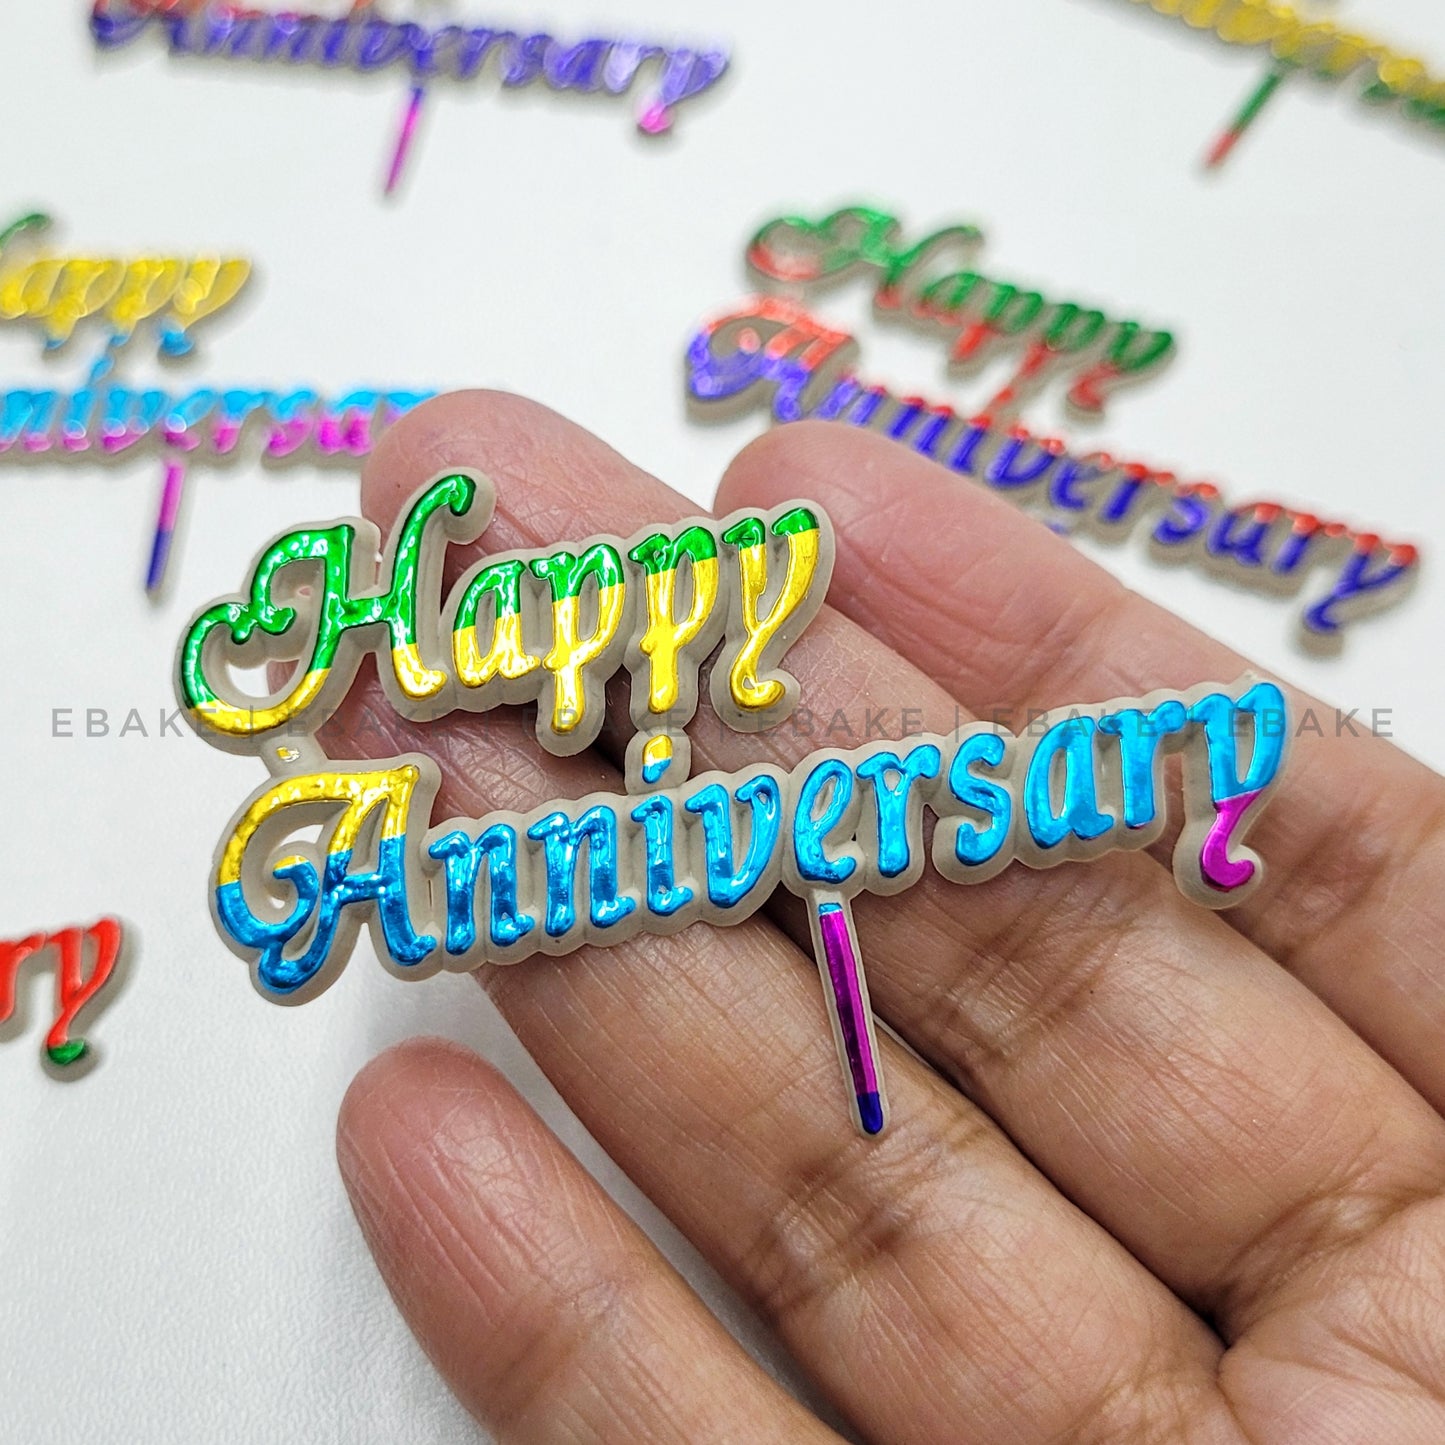 Happy Anniversary Mini Topper Plastic (Set of 10 pieces)